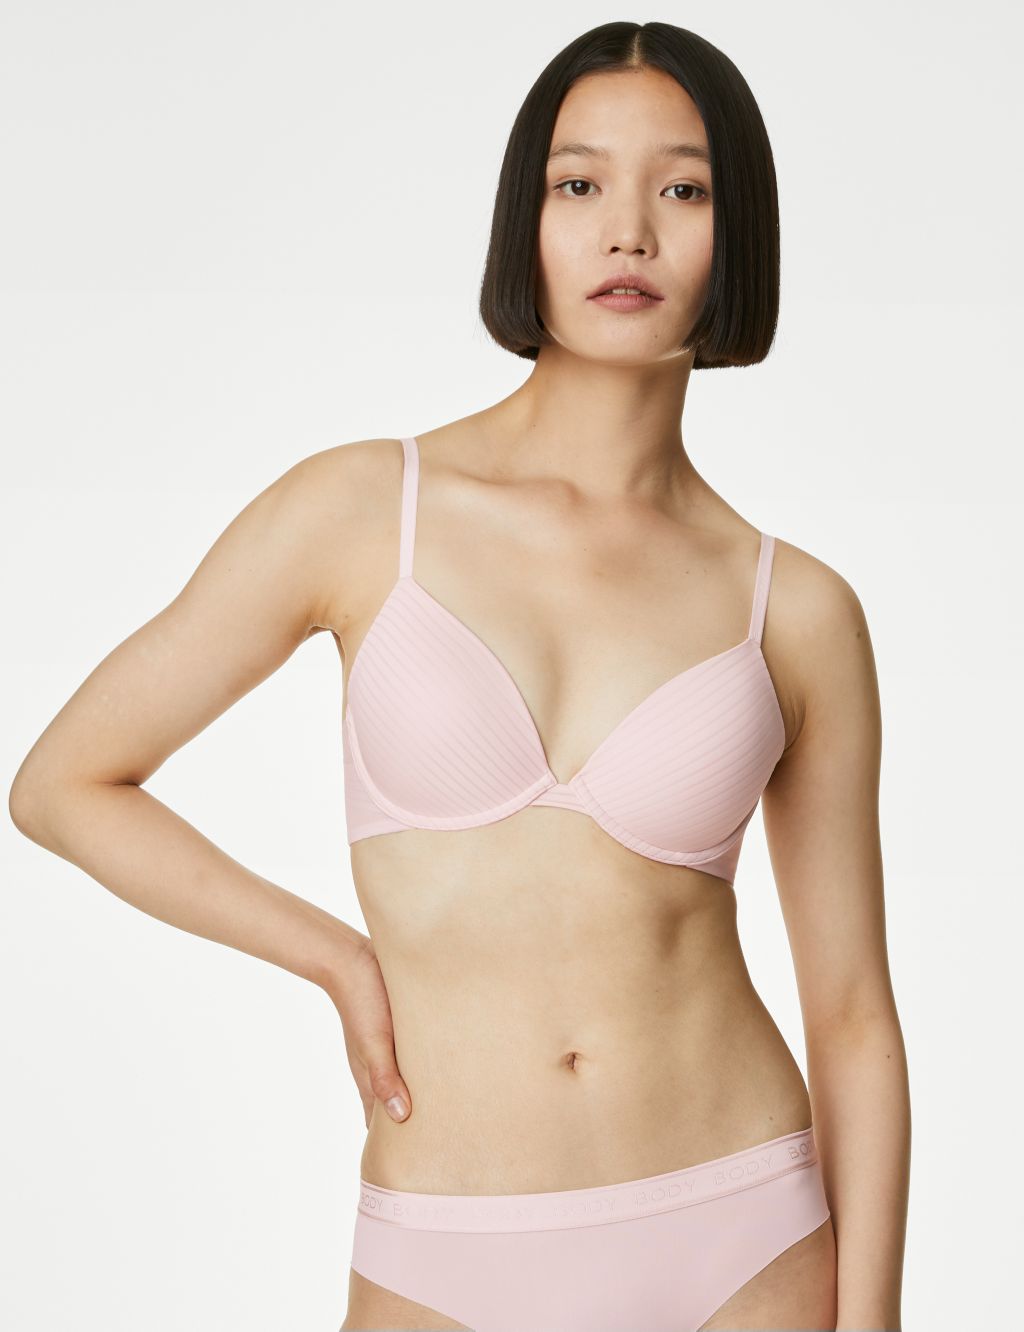 Padded Non-Wired T-Shirt Bra In Hot Pink, Bras :: All Bras Online Lingerie  Shopping: Clovia